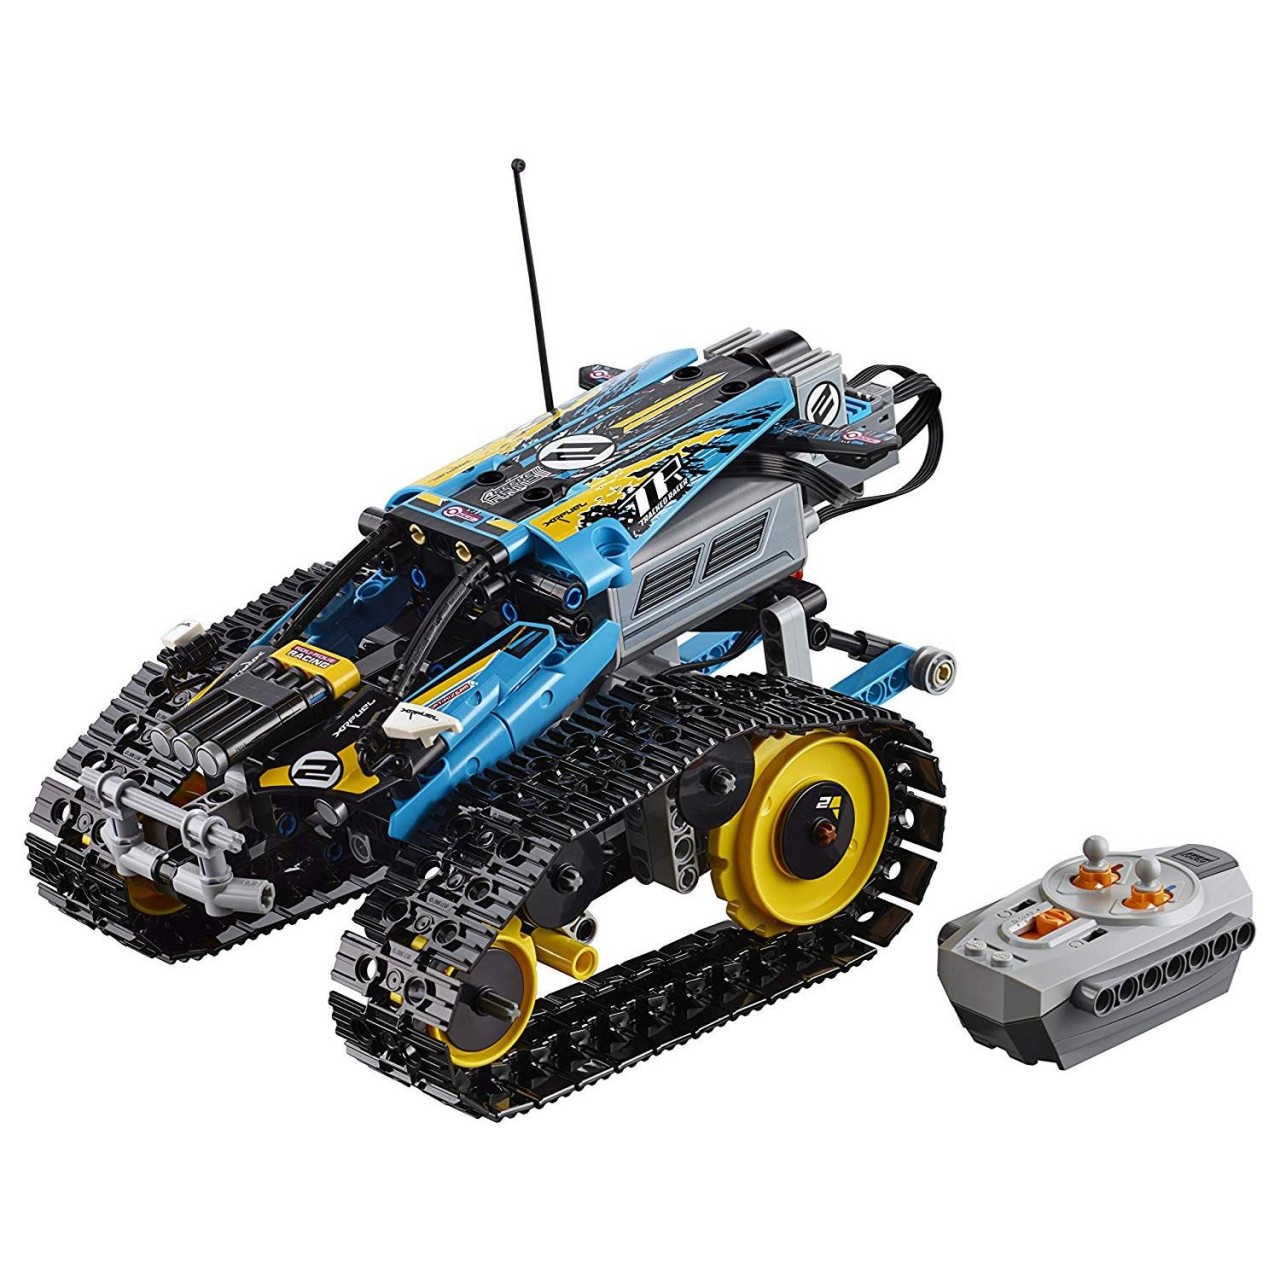 LEGO TECHNIC 42095 Ferngesteuerter Stunt-Racer